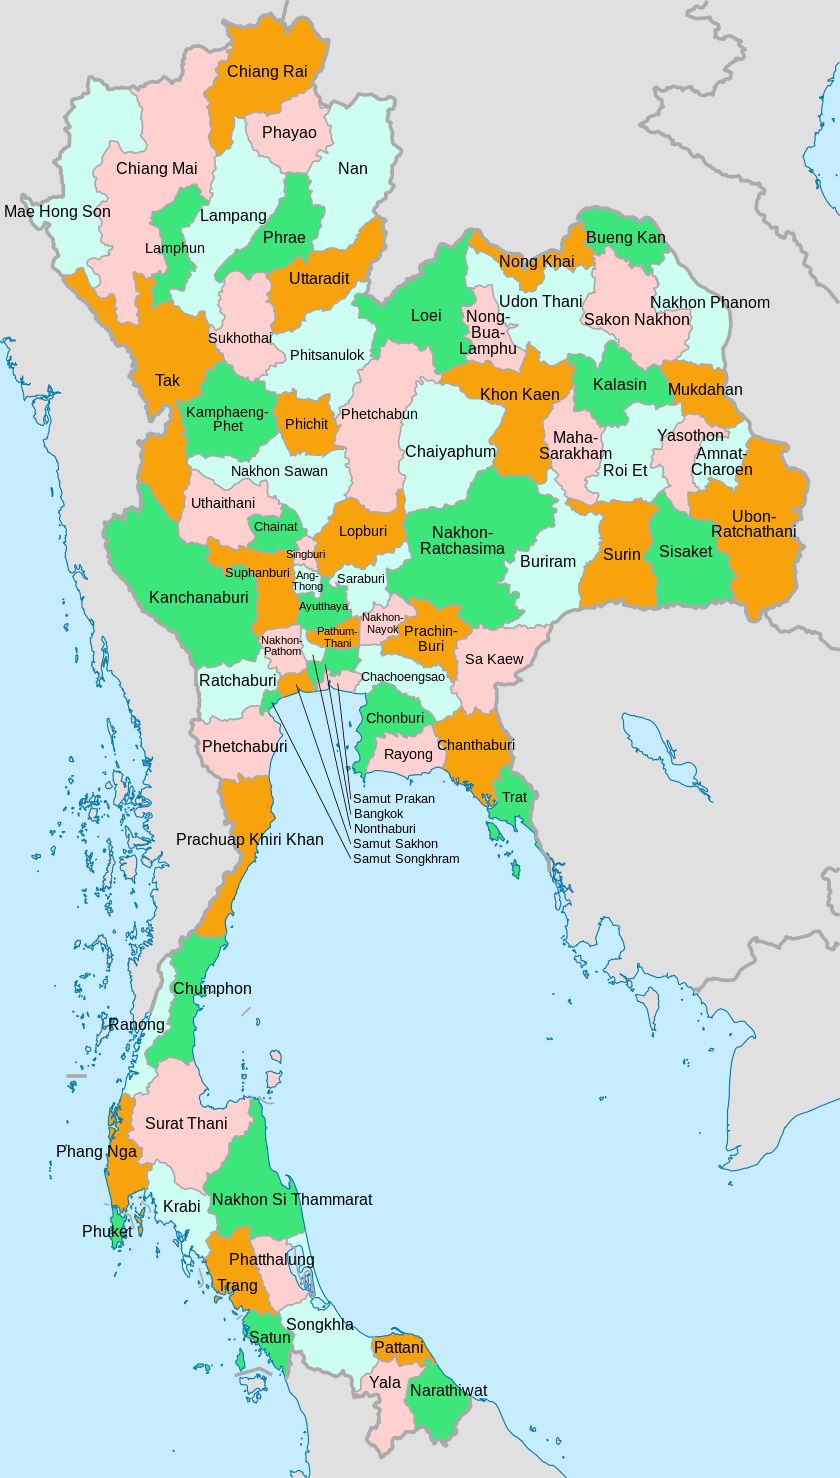 A clickable map of Thailand exhibiting its provinces.